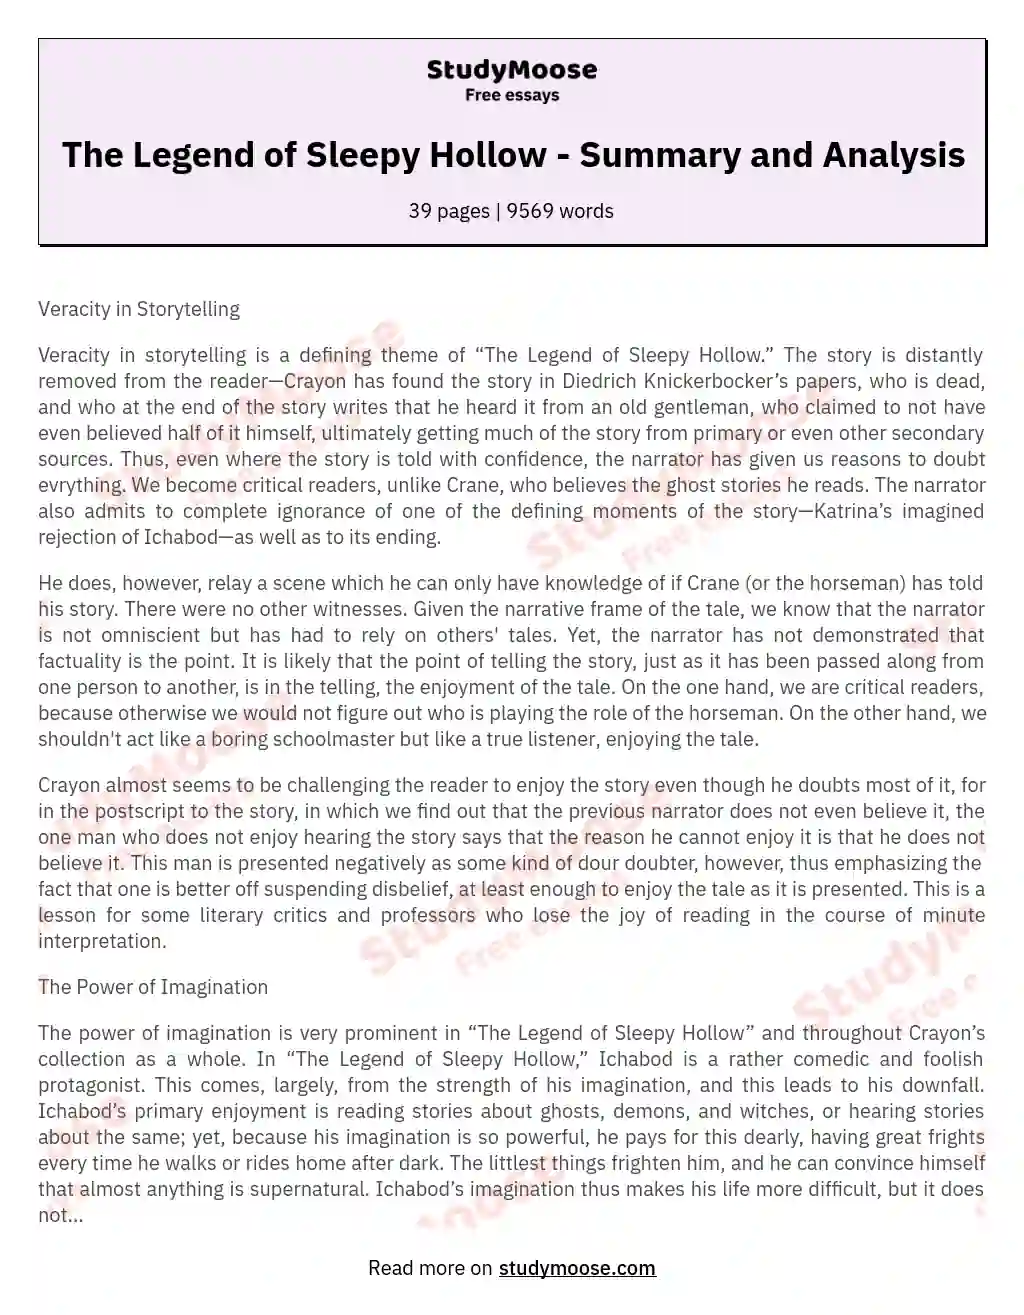 The Legend of Sleepy Hollow - Summary and Analysis essay